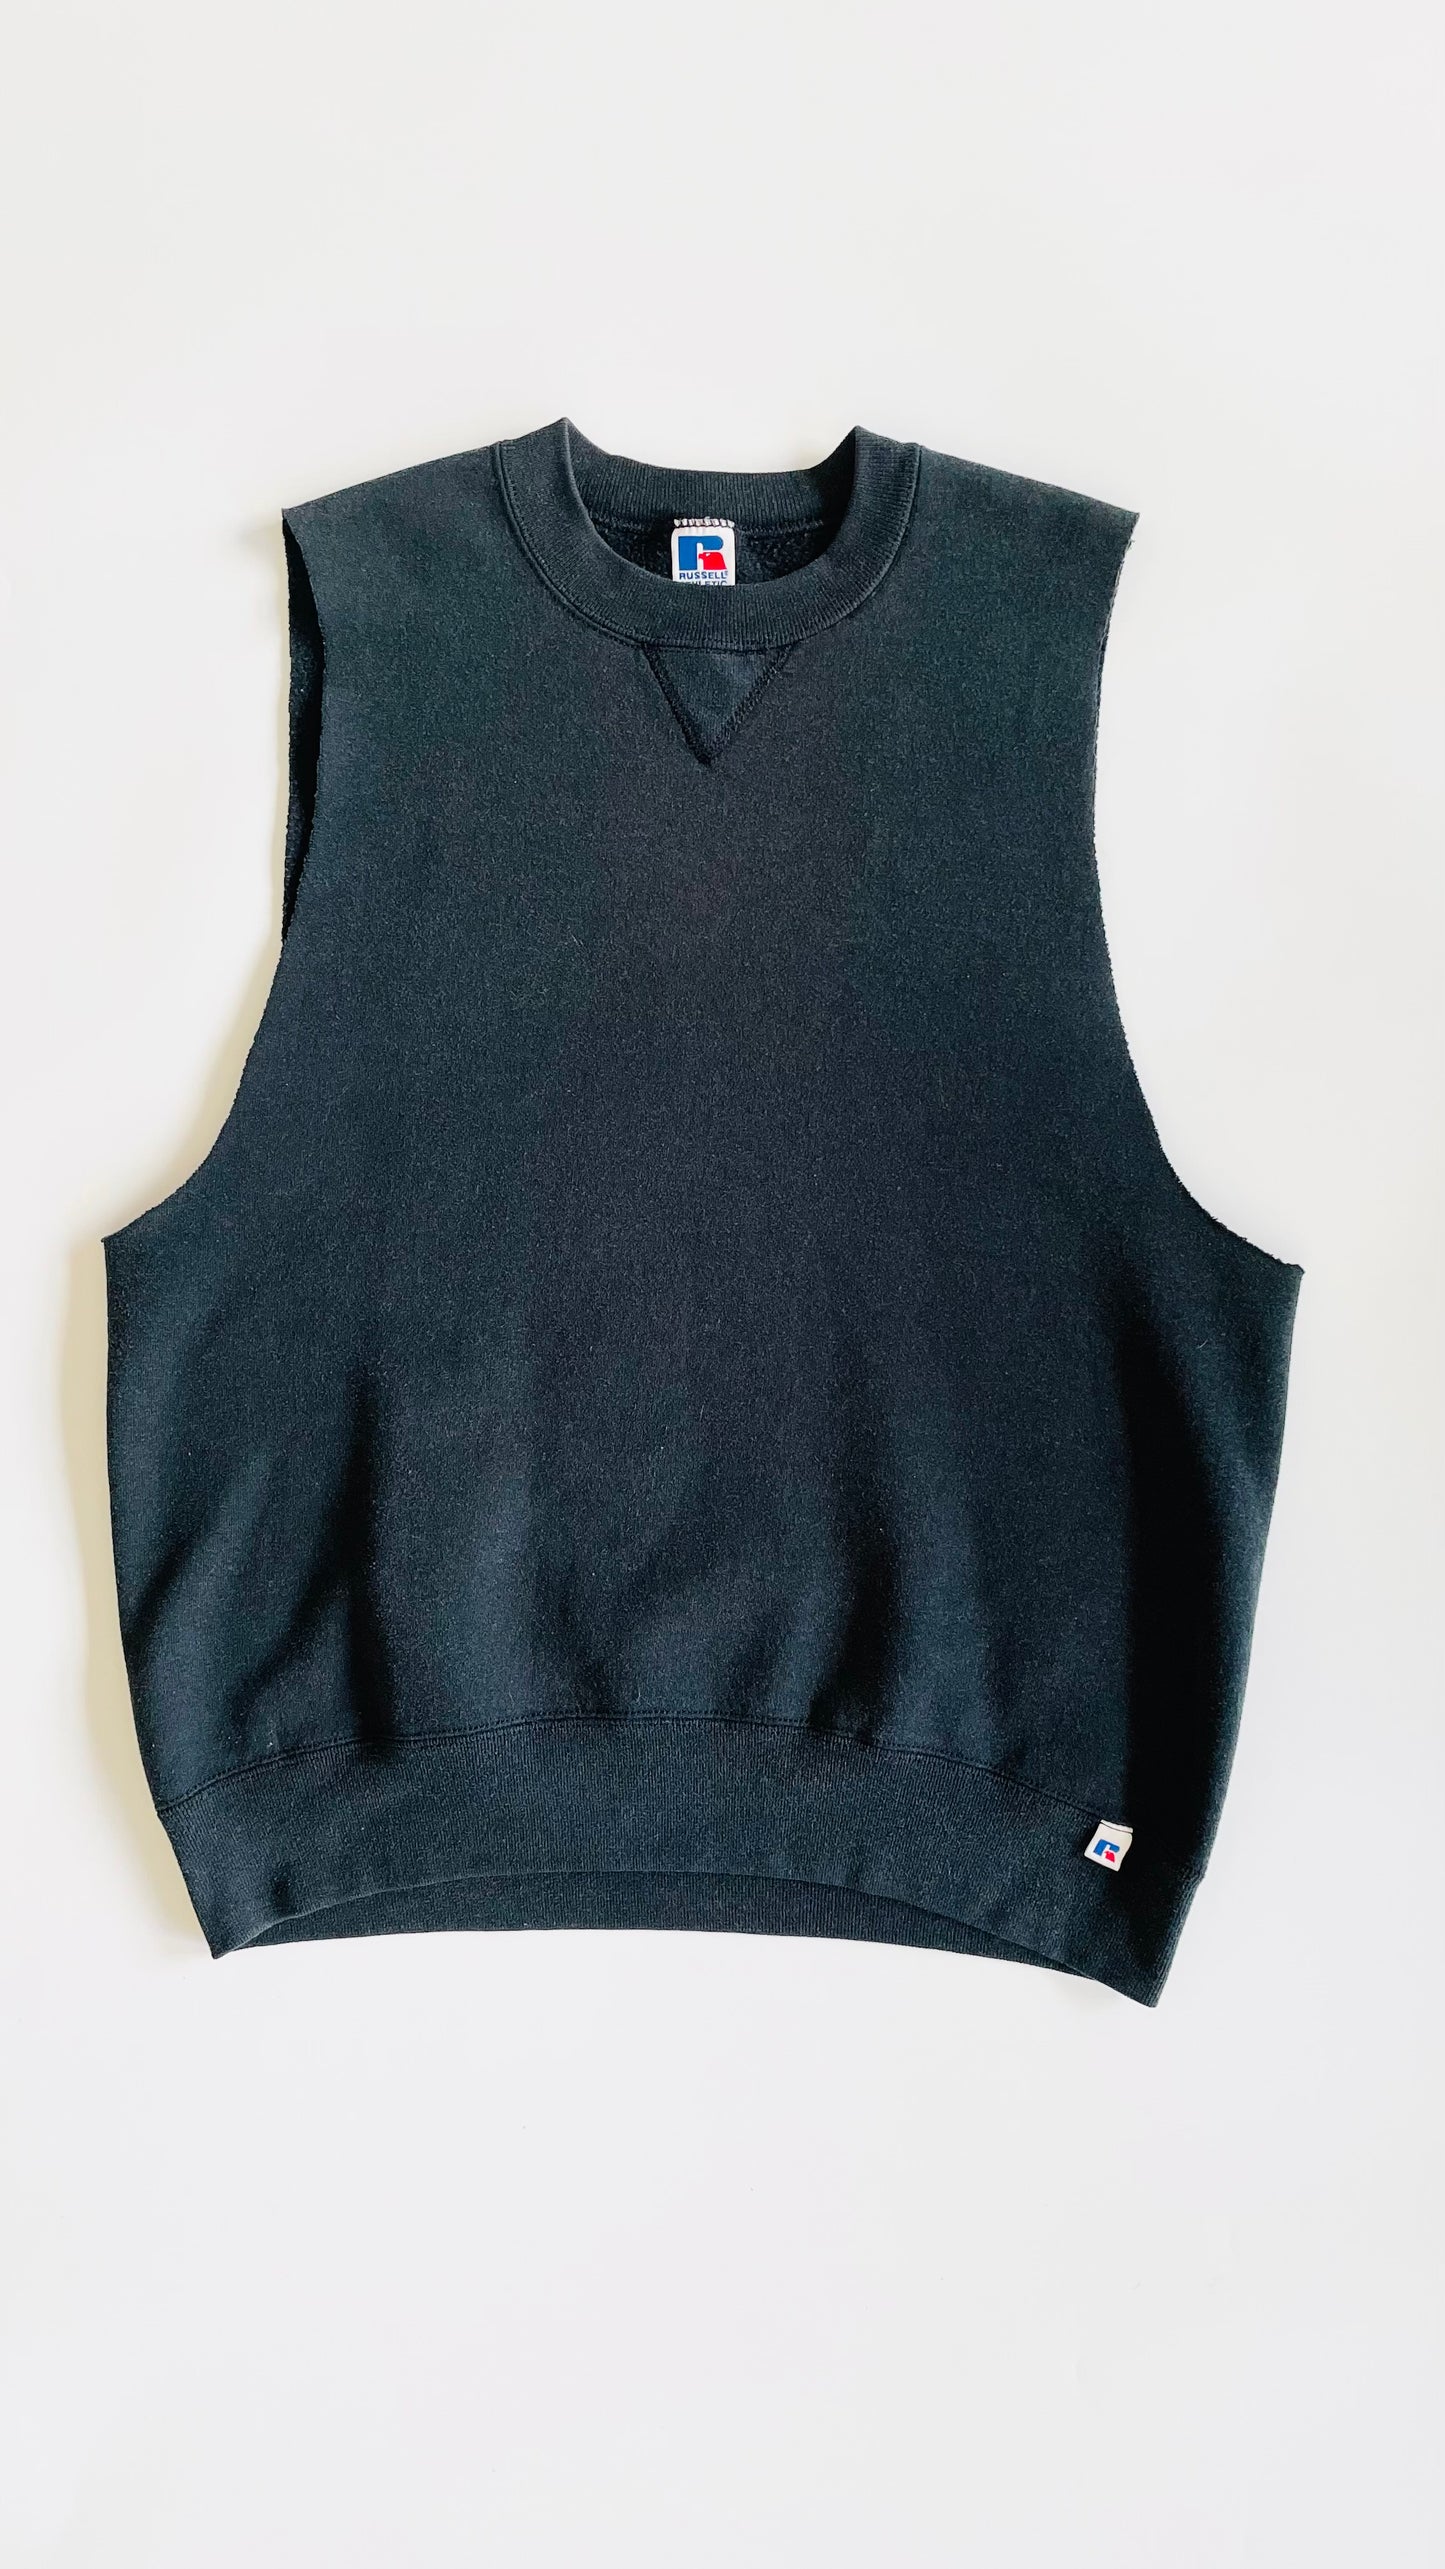 Vintage Russell Athletic faded black sweatshirt vest - Size L